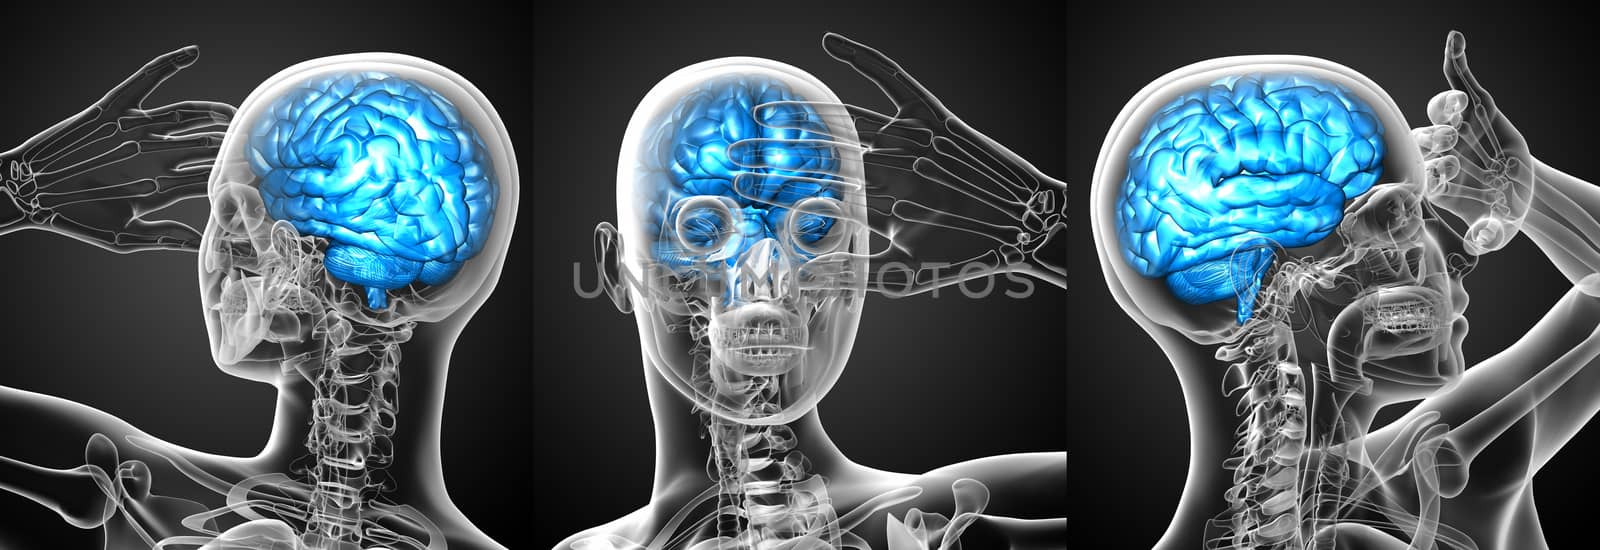 3d rendering medical illustration of the brain